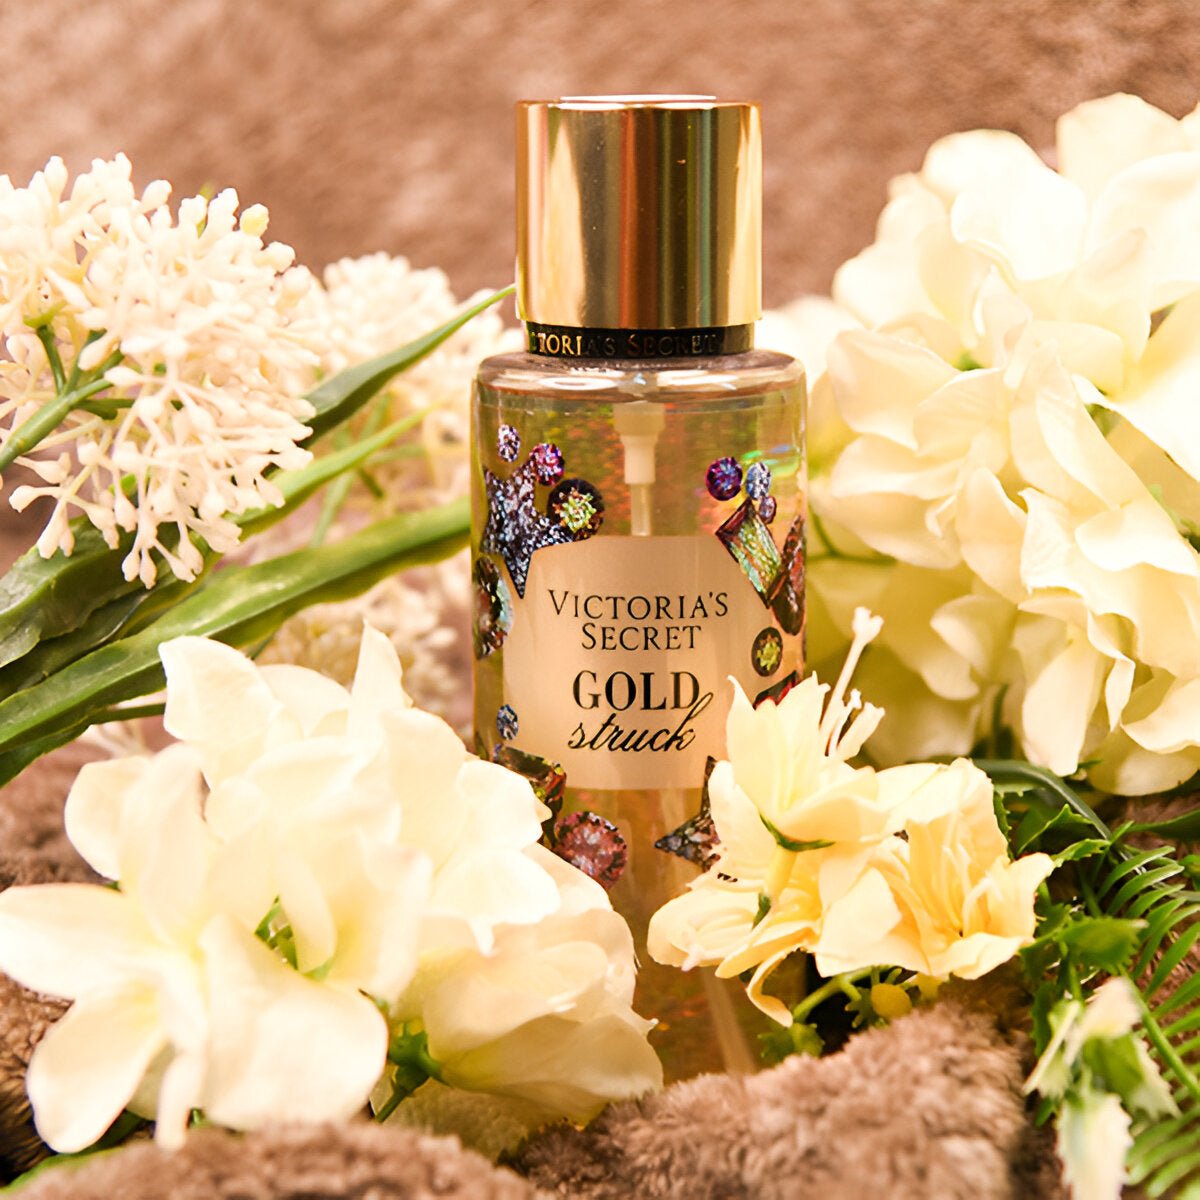 Victoria's Secret Gold Struck Body Lotion | My Perfume Shop Australia